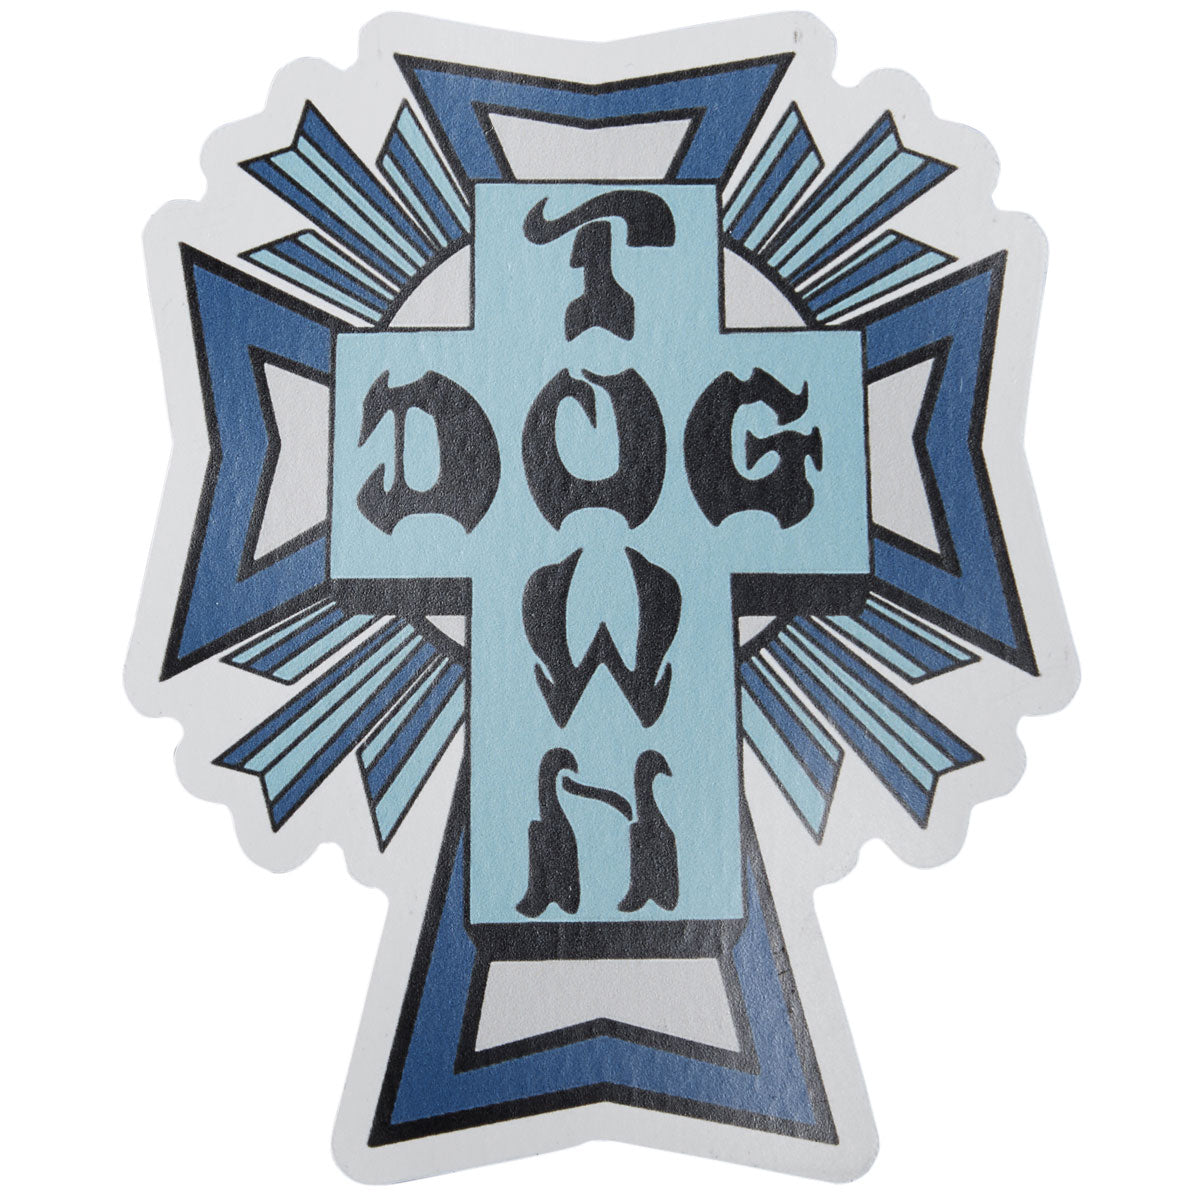 Dogtown Cross Logo Magnet - Blue image 1